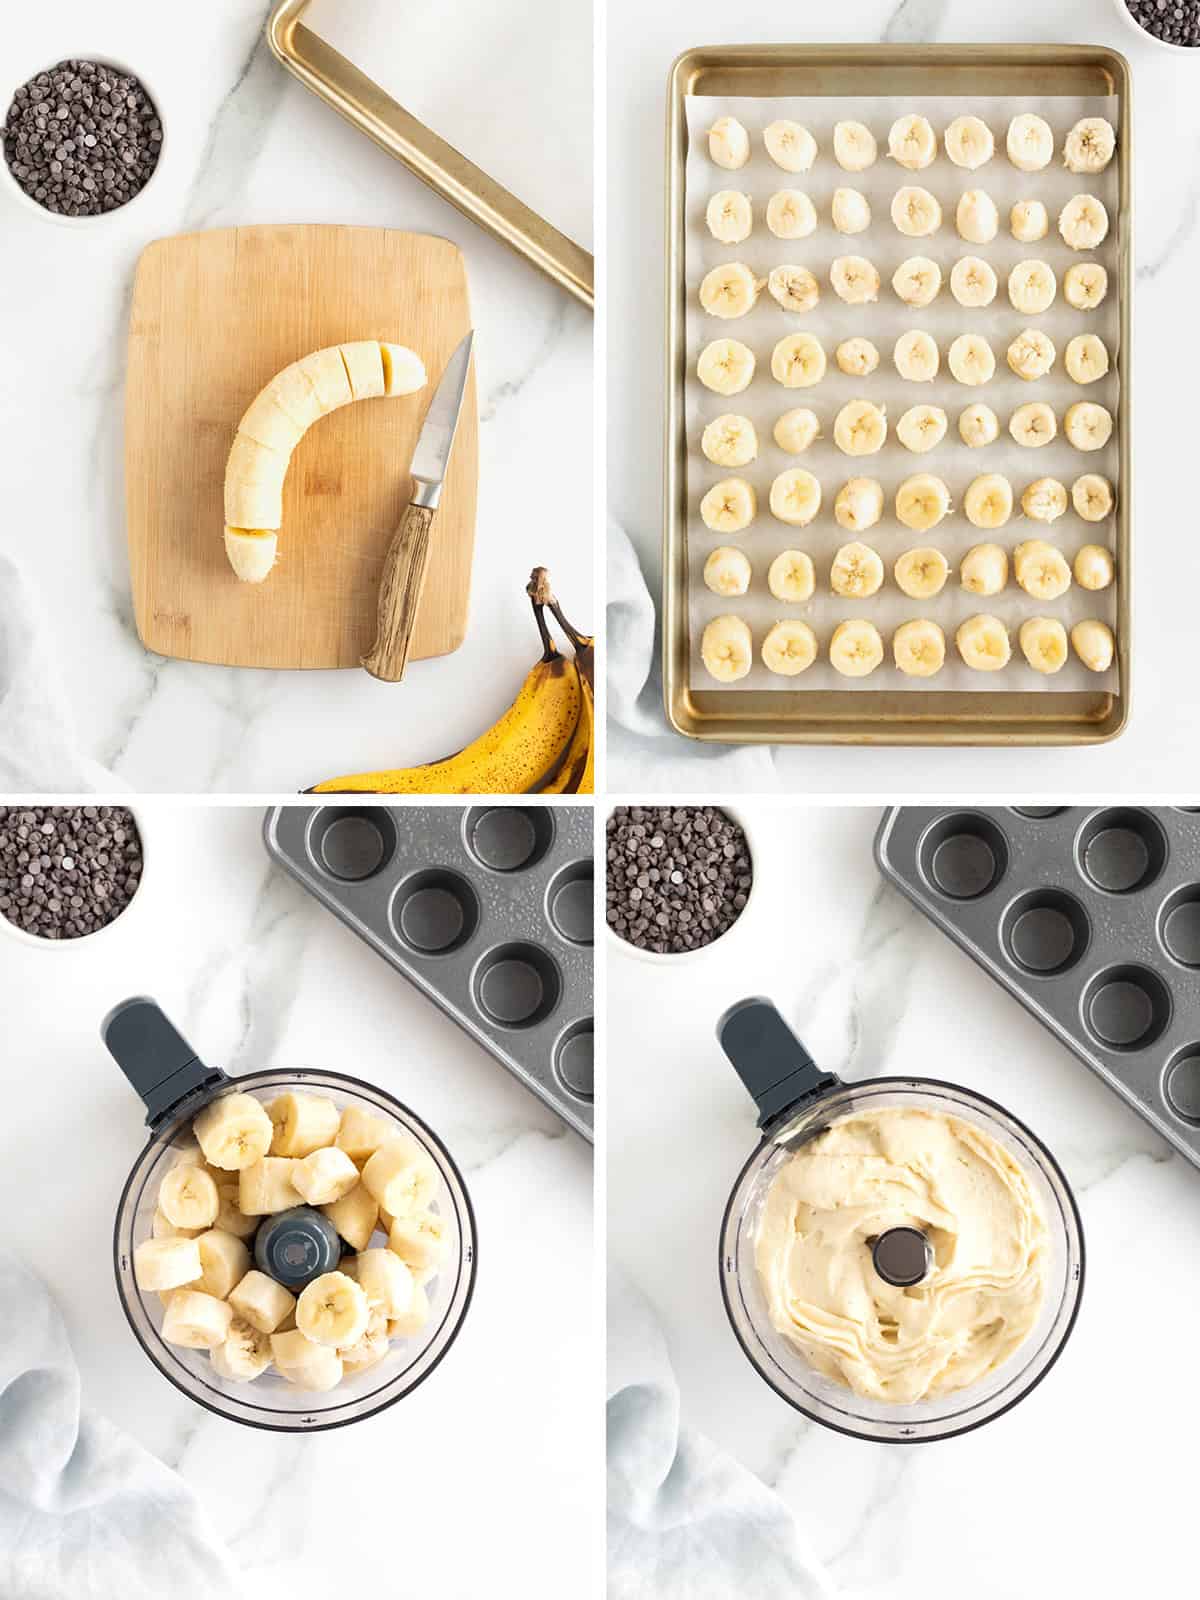 Steps to make banana ice cream bites.